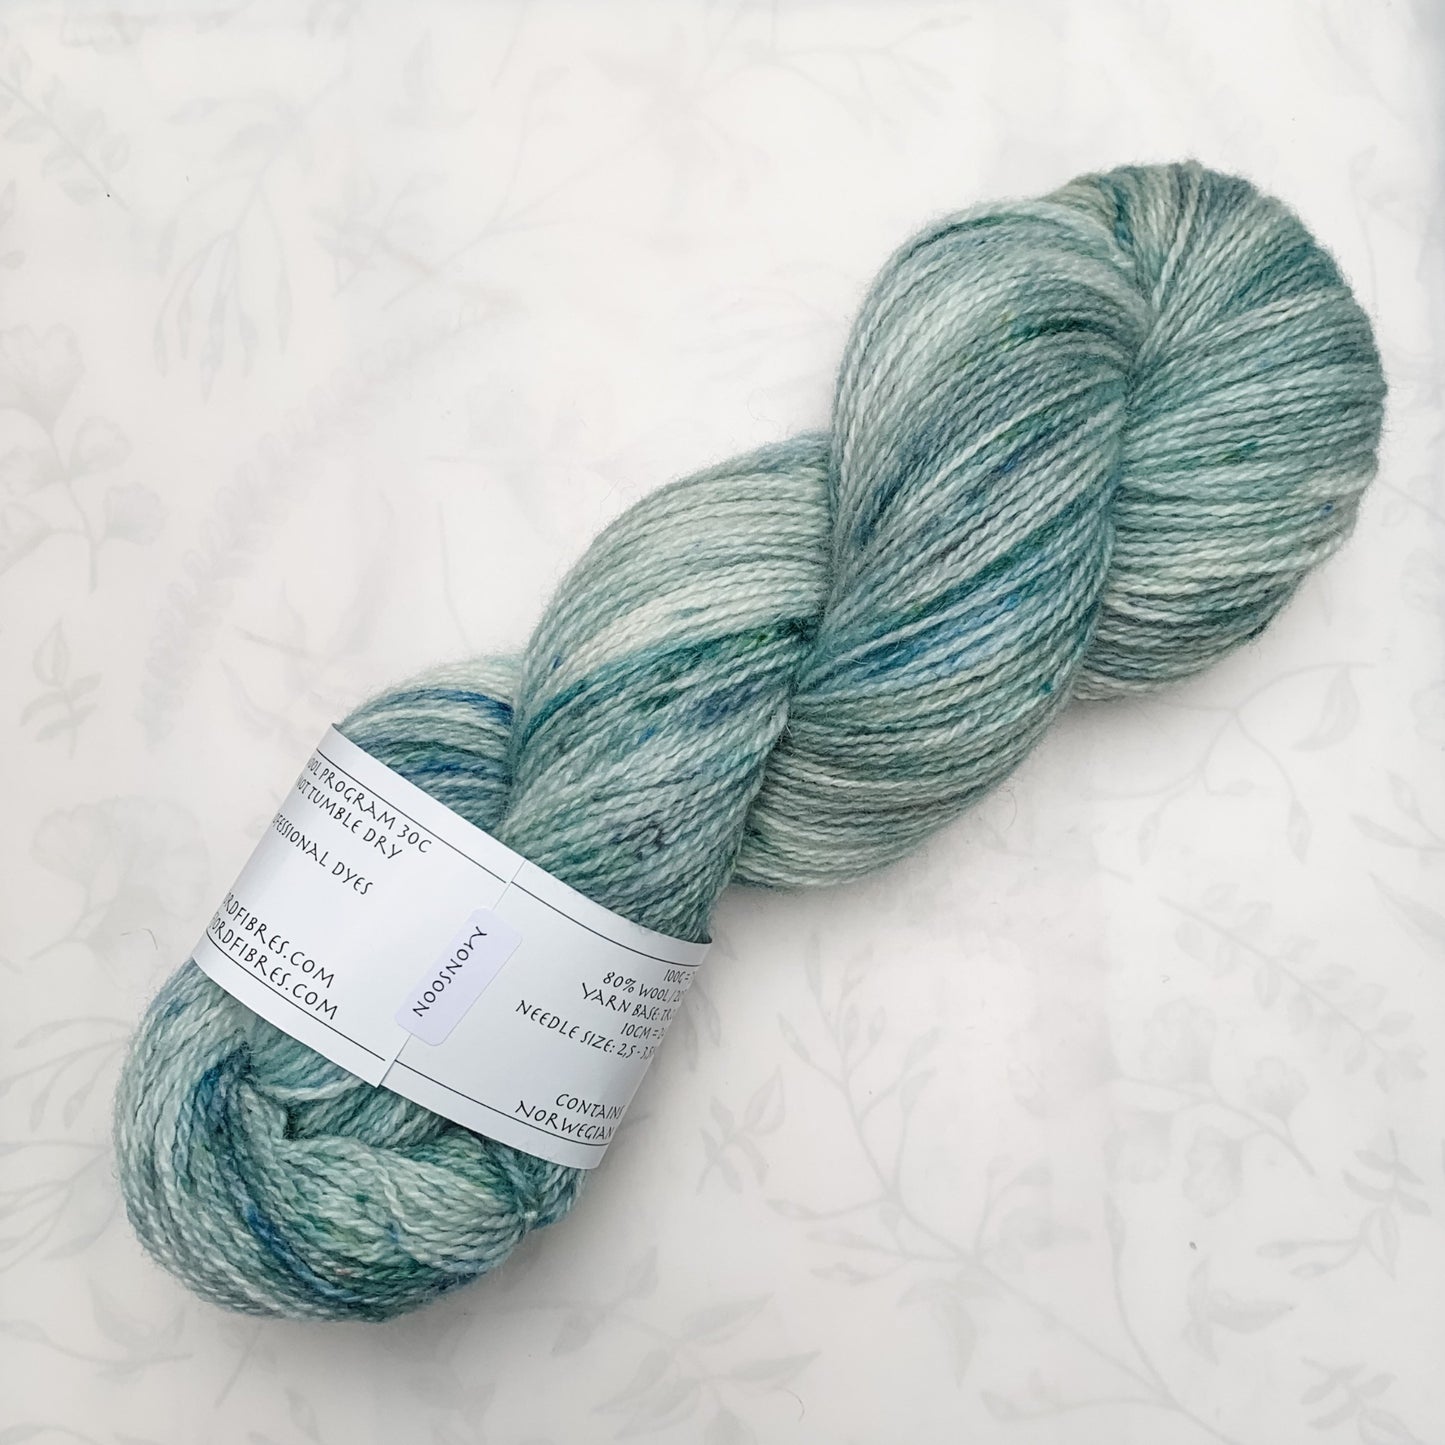 Monsoon - Trollfjord sock - Hand Dyed Yarn - Variegated Yarn